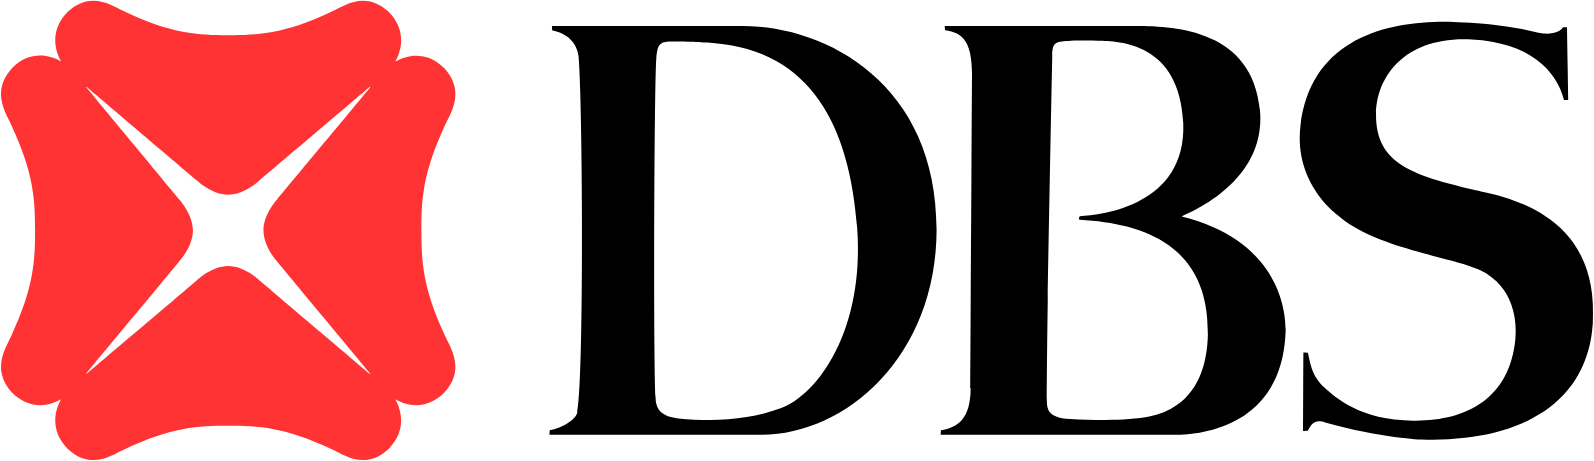 DBS Group logo large (transparent PNG)